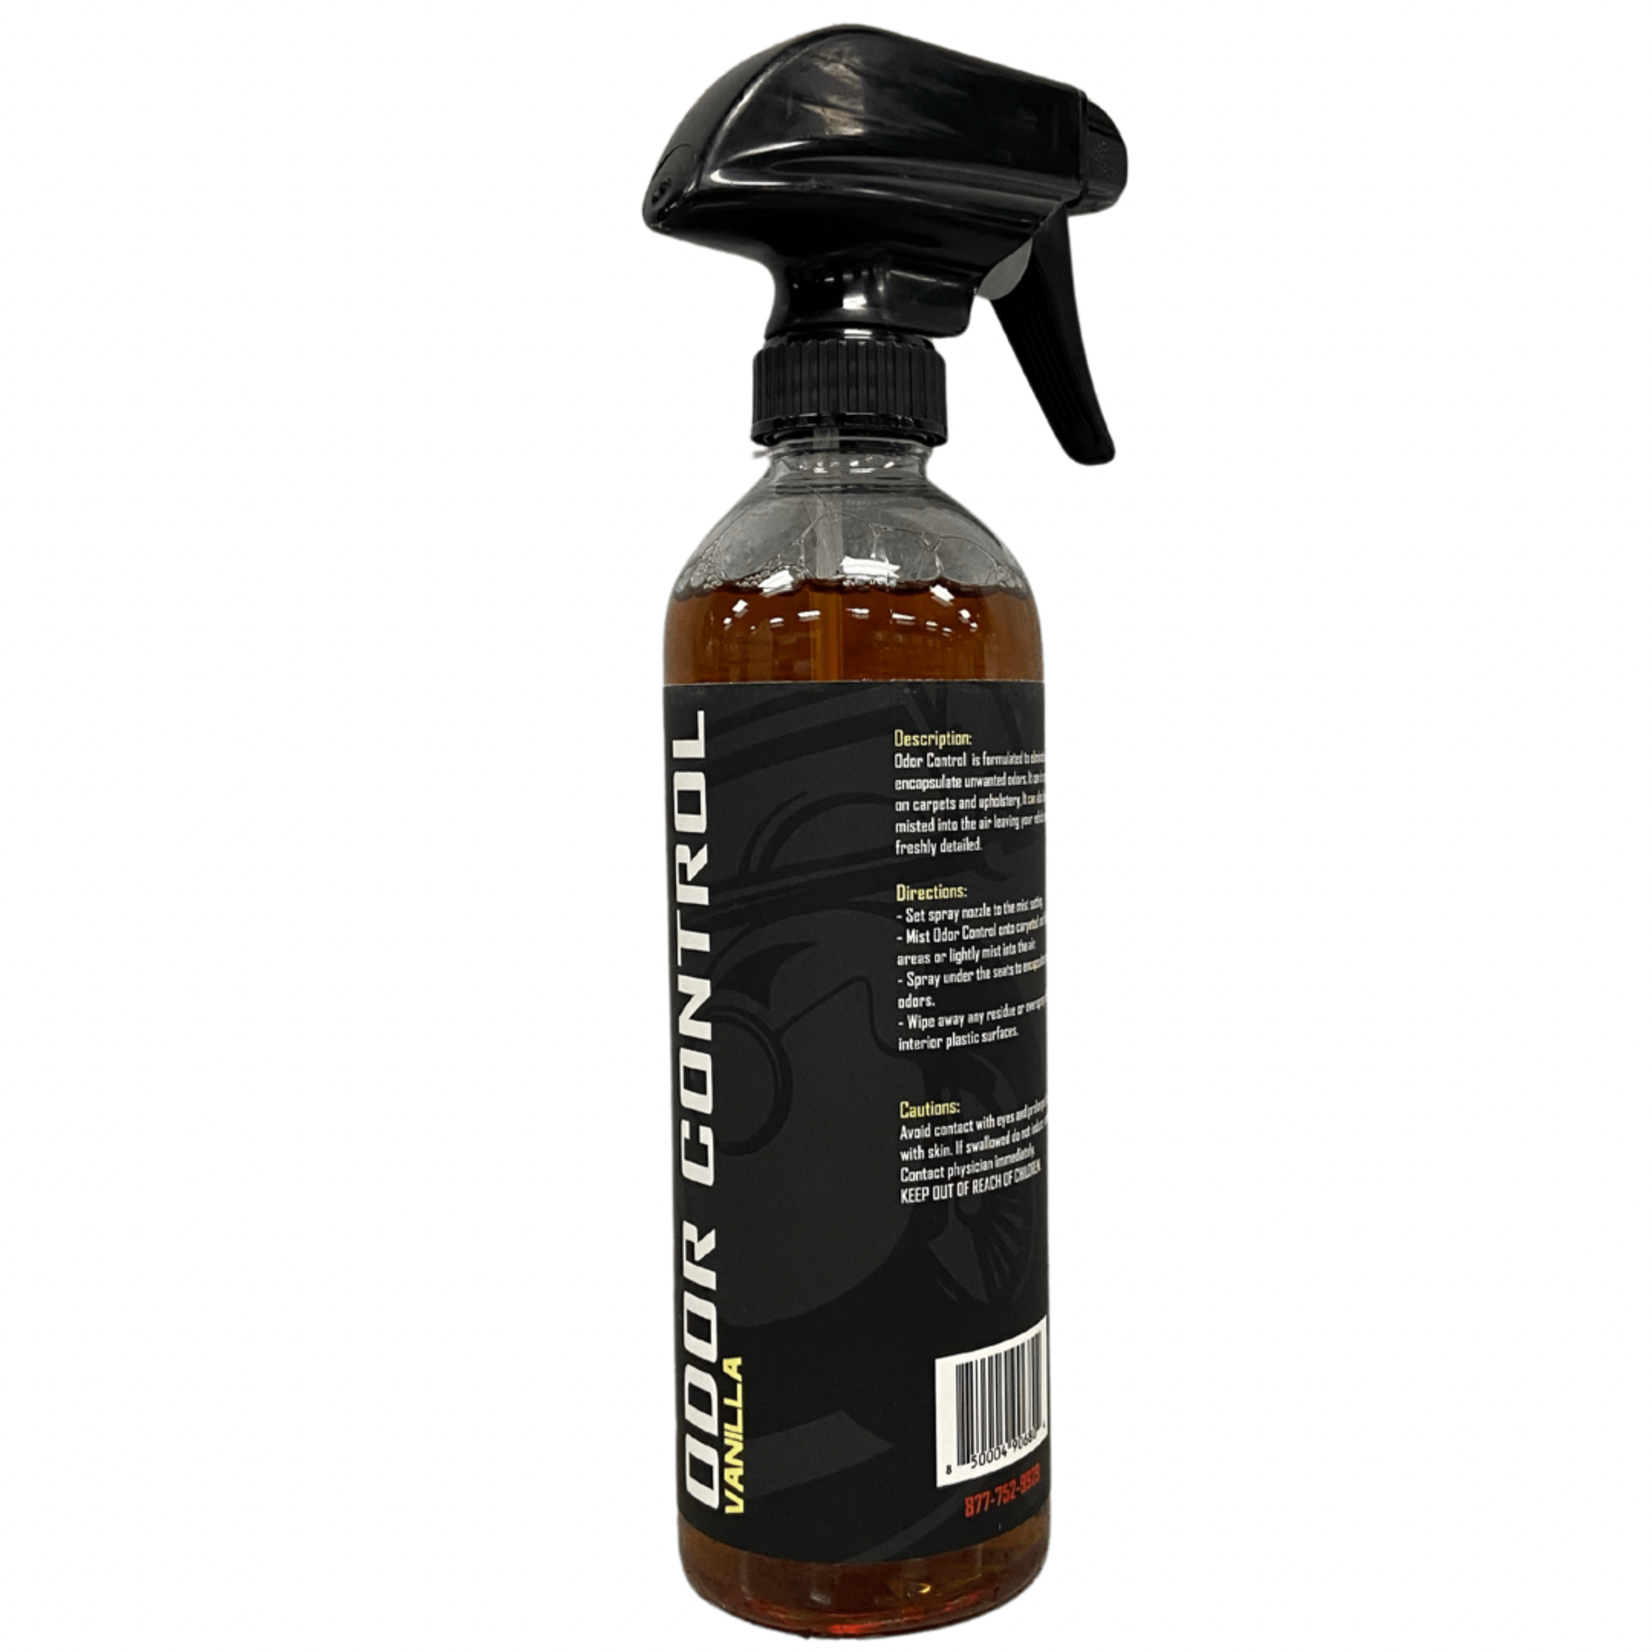 Jax Wax Odor Control Vanilla (16OZ) - iRep Auto Detail Supply